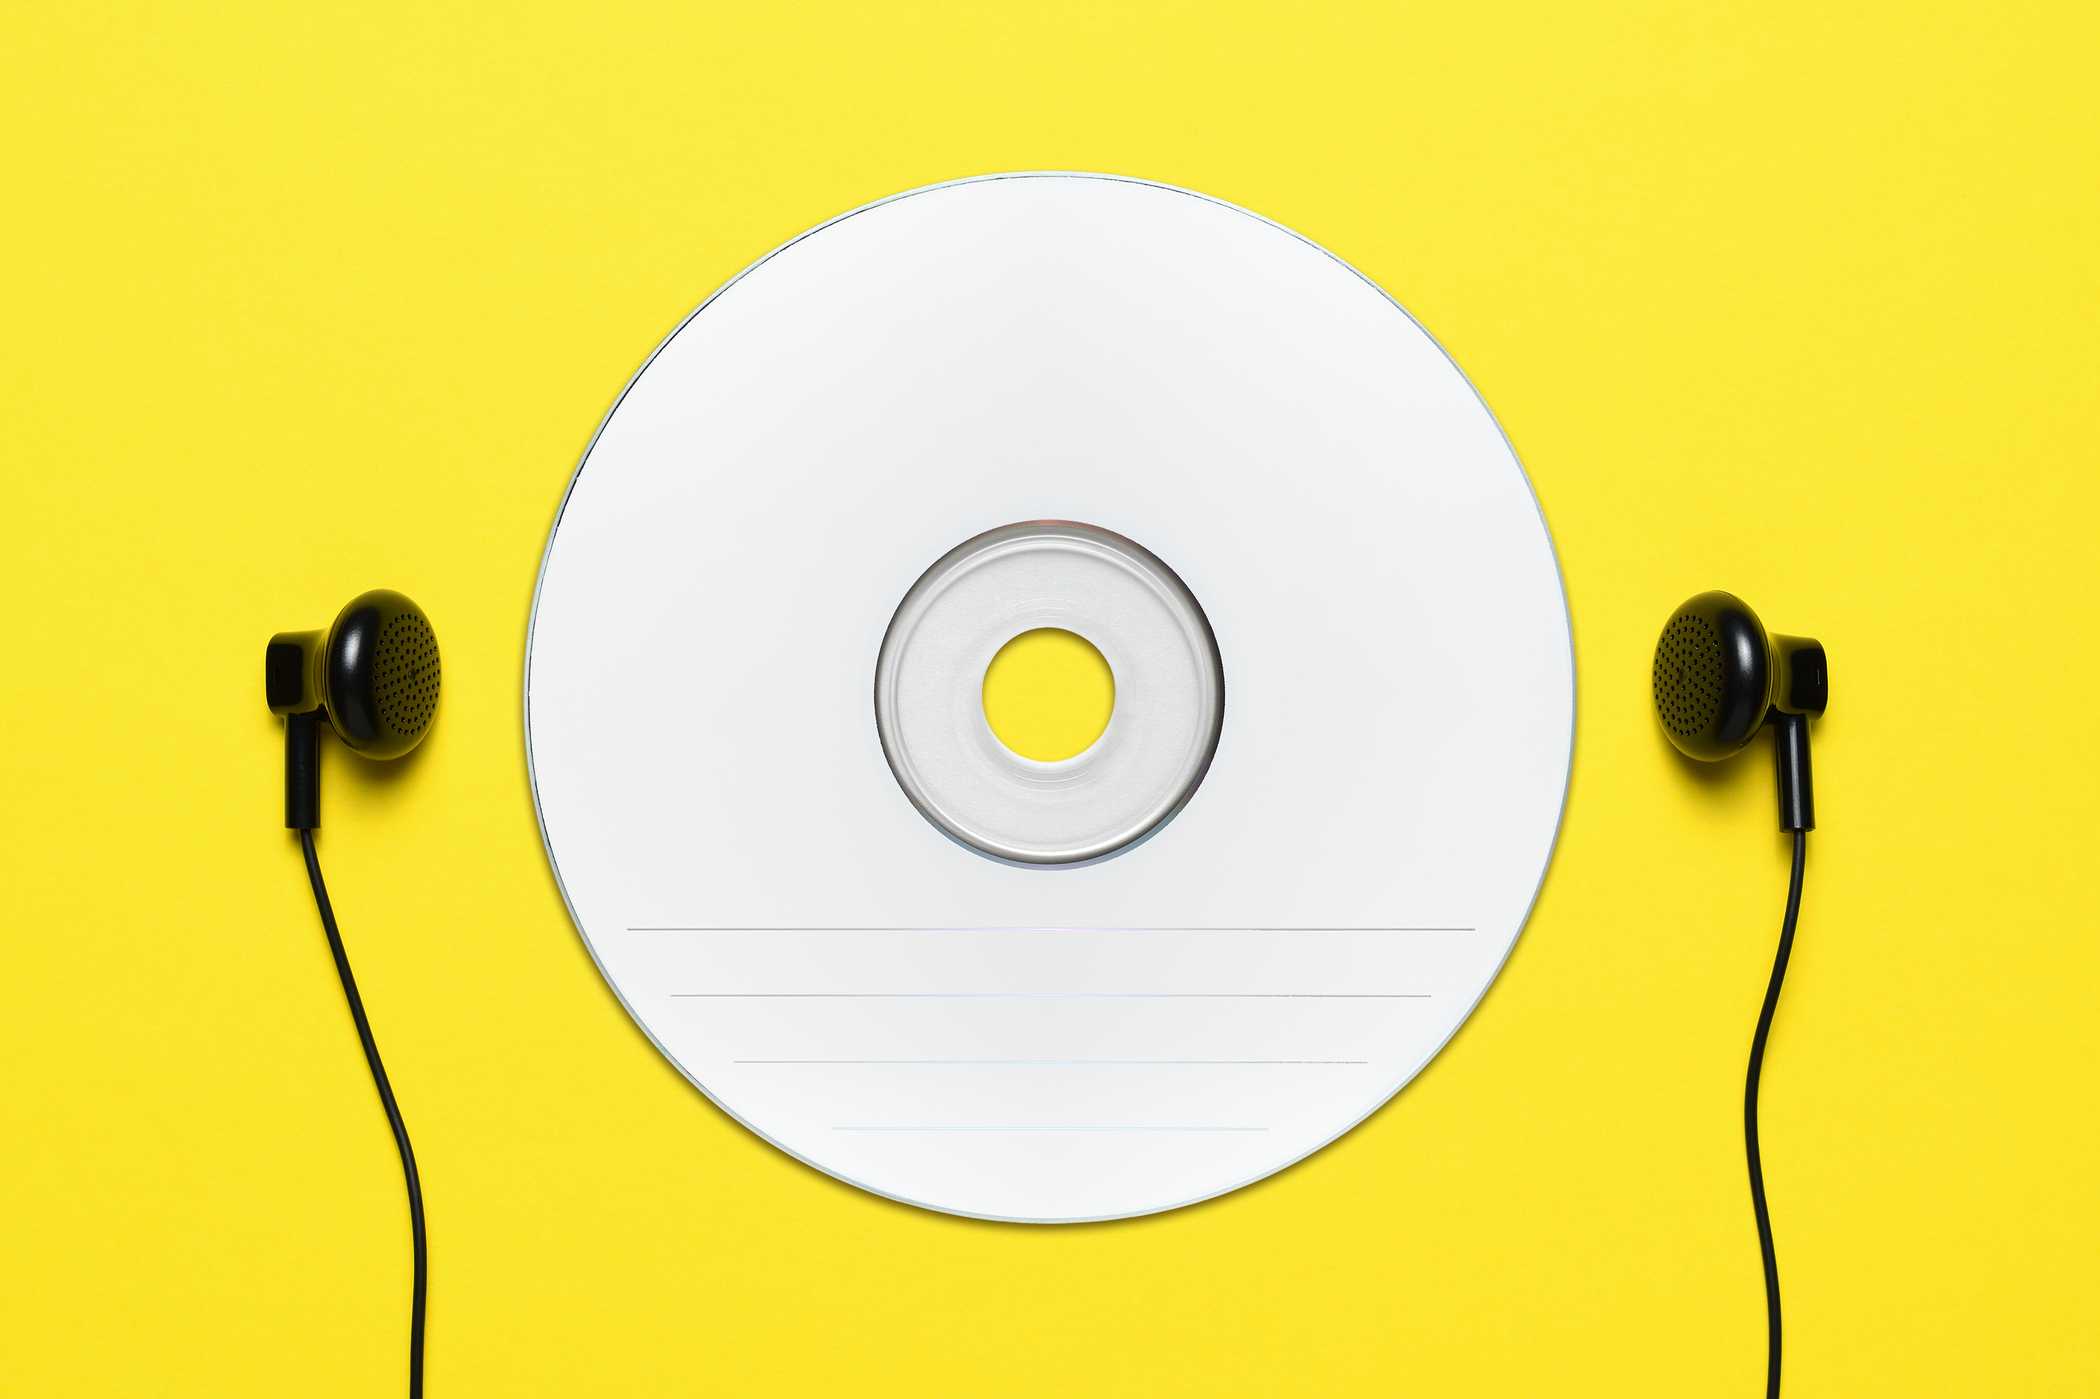 blank-cd-and-headphones-on-yellow-background-2021-08-26-15-35-24-utc.jpg